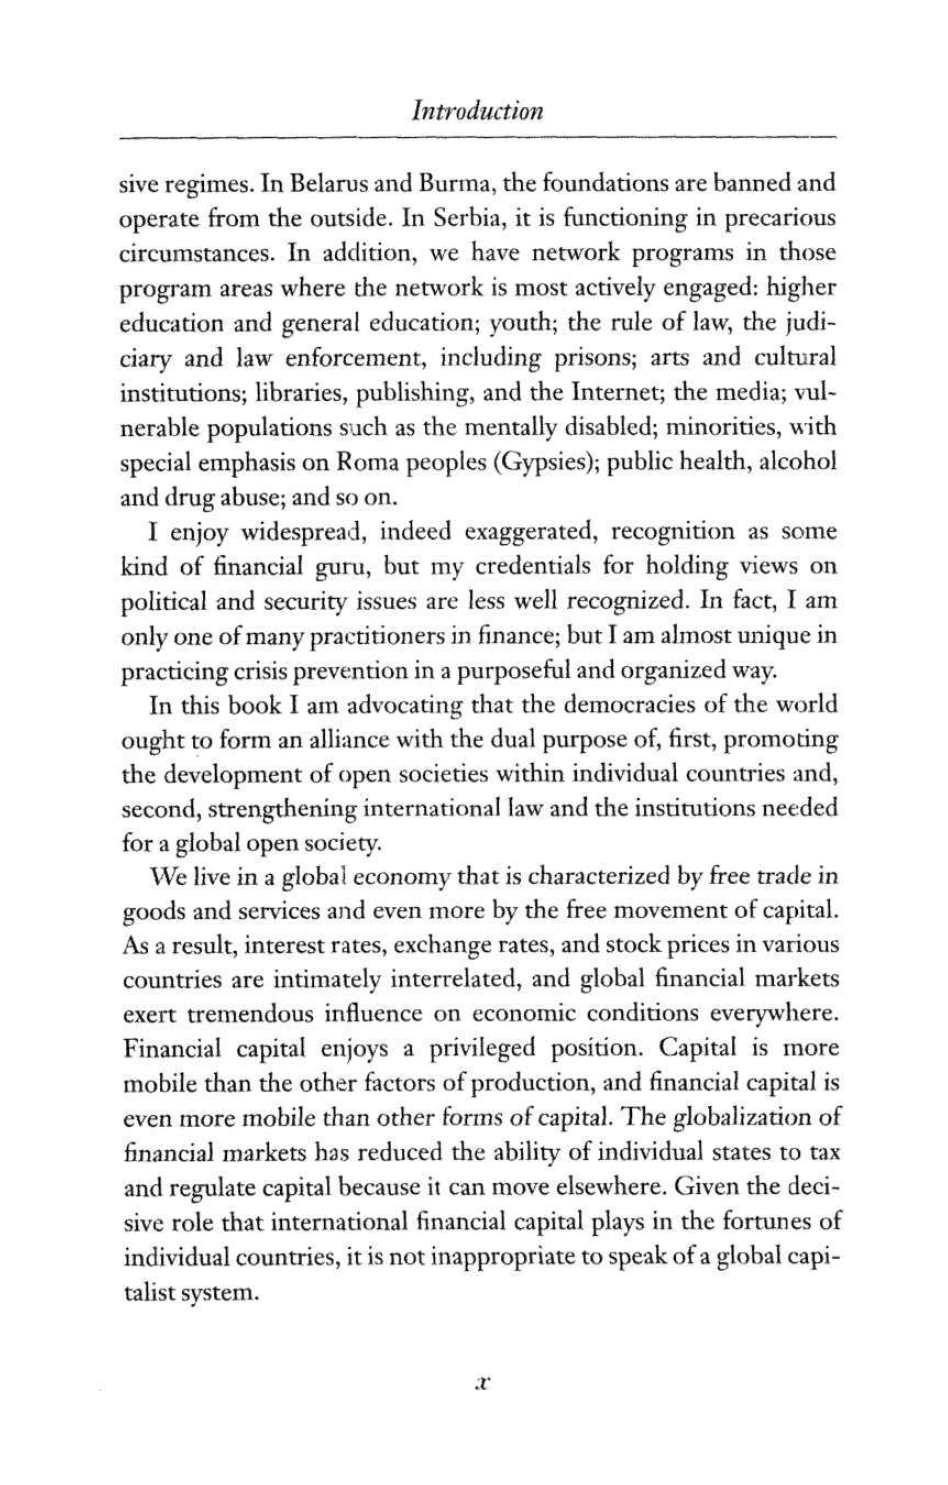 George Soros' book 'Open Society —Reforming Global Capitalism' (November 7, 2000)